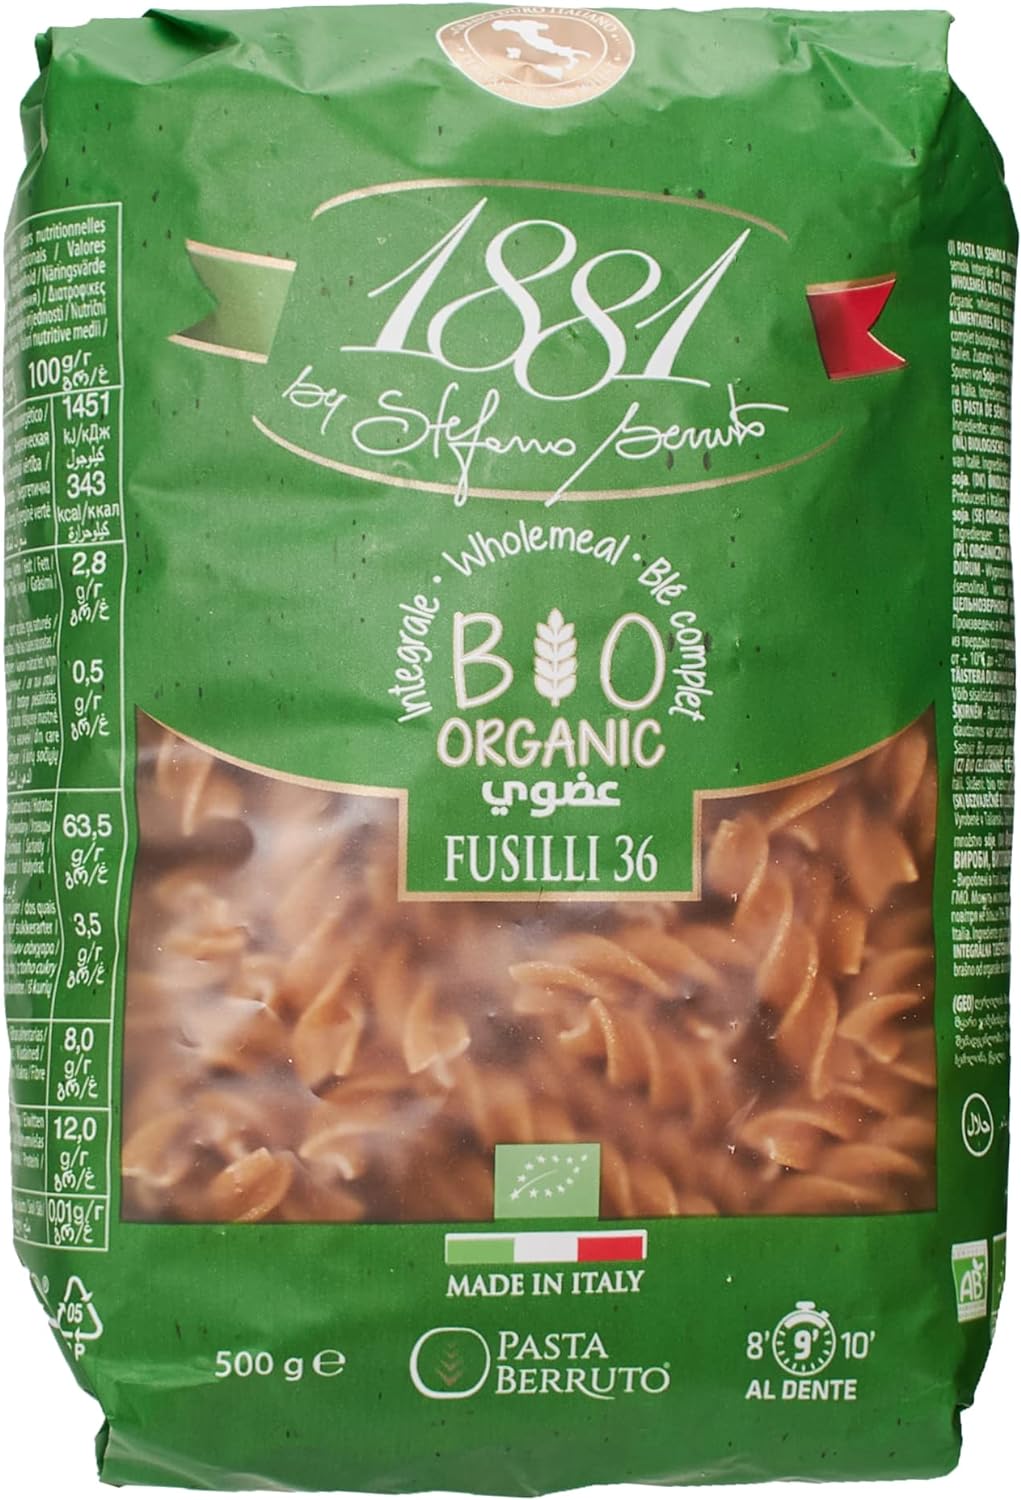 1881 Organic Whole meal Fusilli36 Pasta 500g